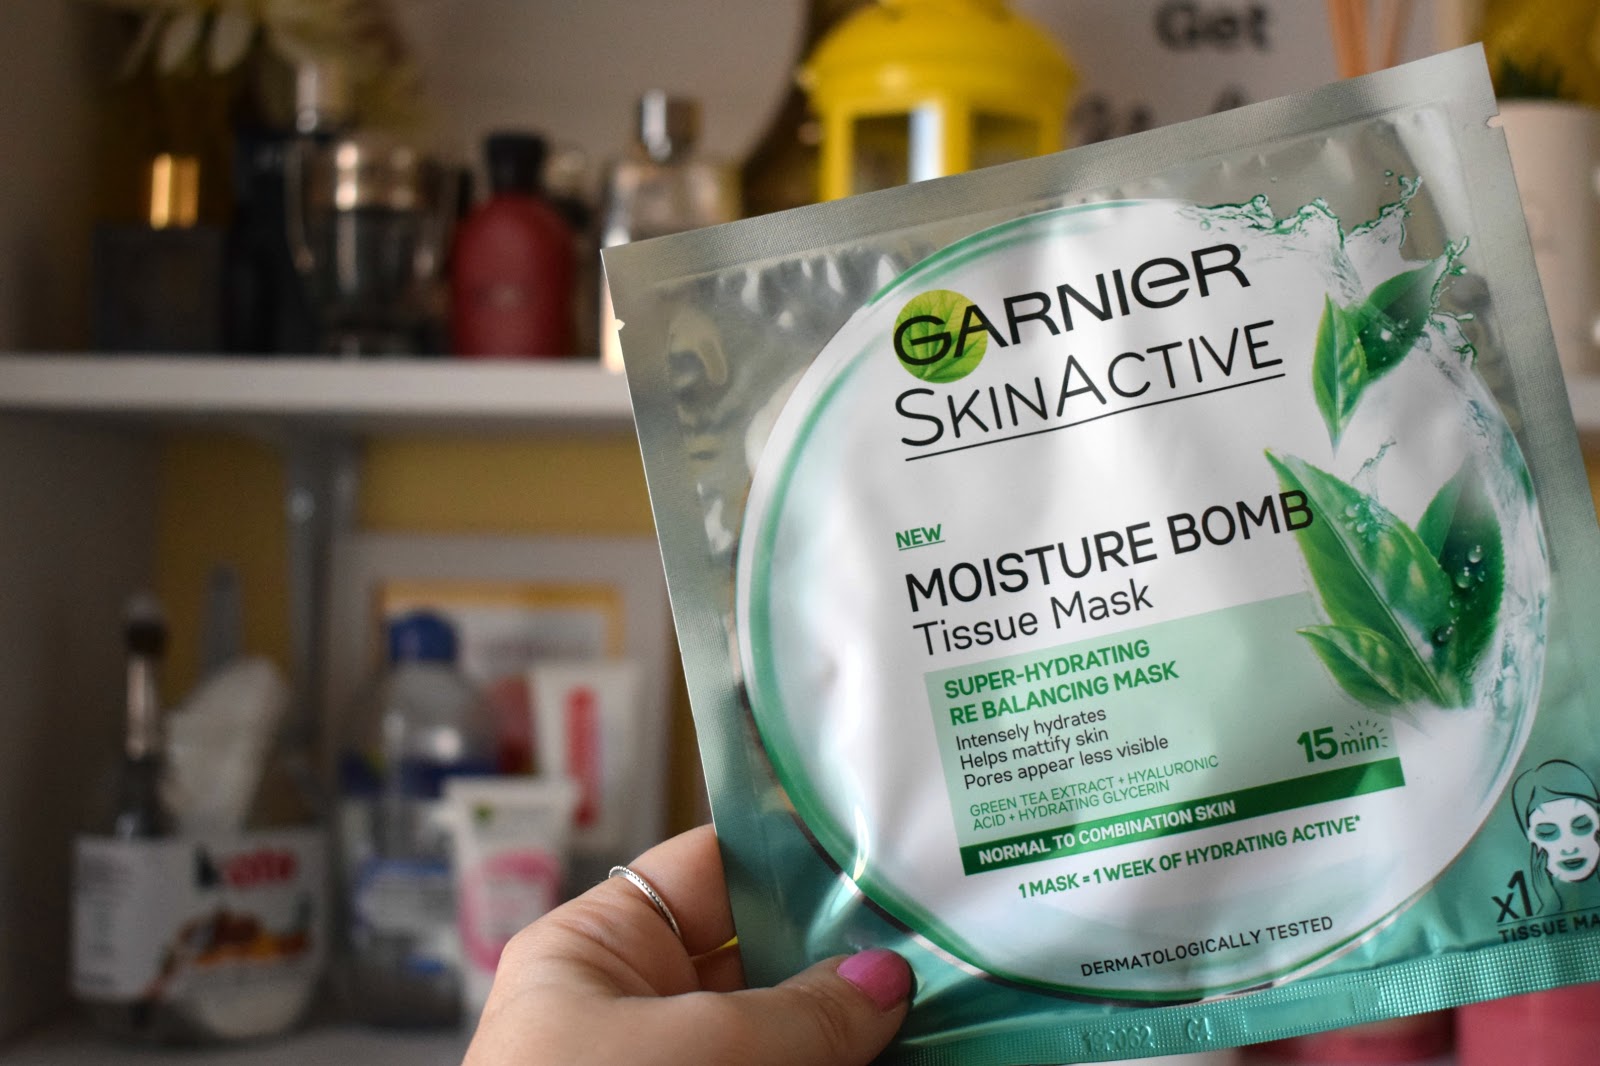 Garnier skinactive moisture bomb green tea tissue mask review